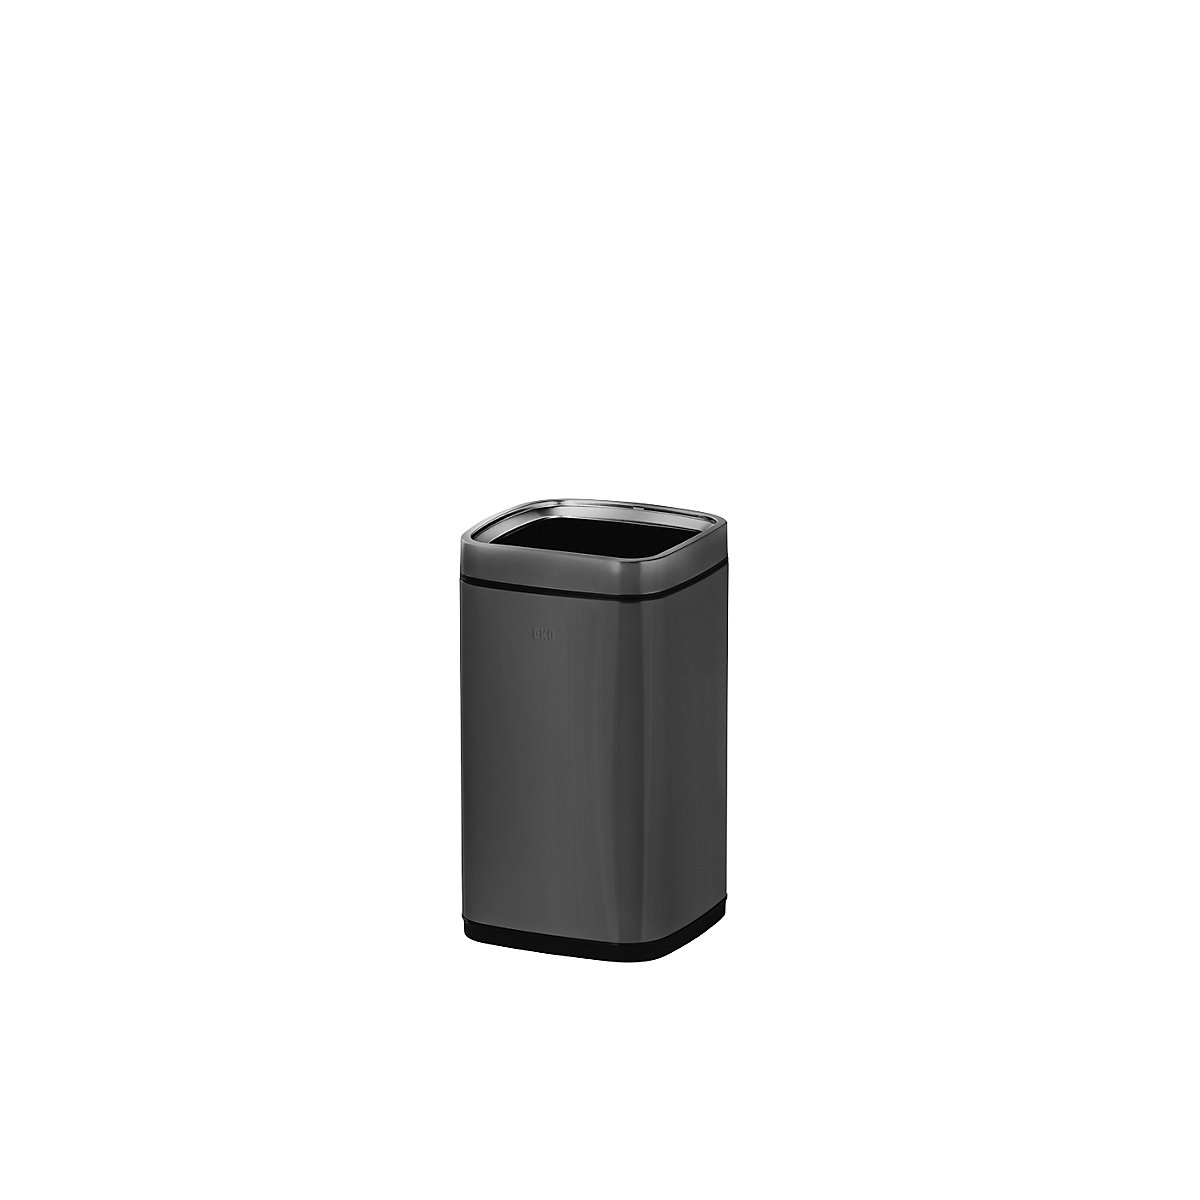 Waste paper bin with inner container – EKO, capacity 12 l, black-3